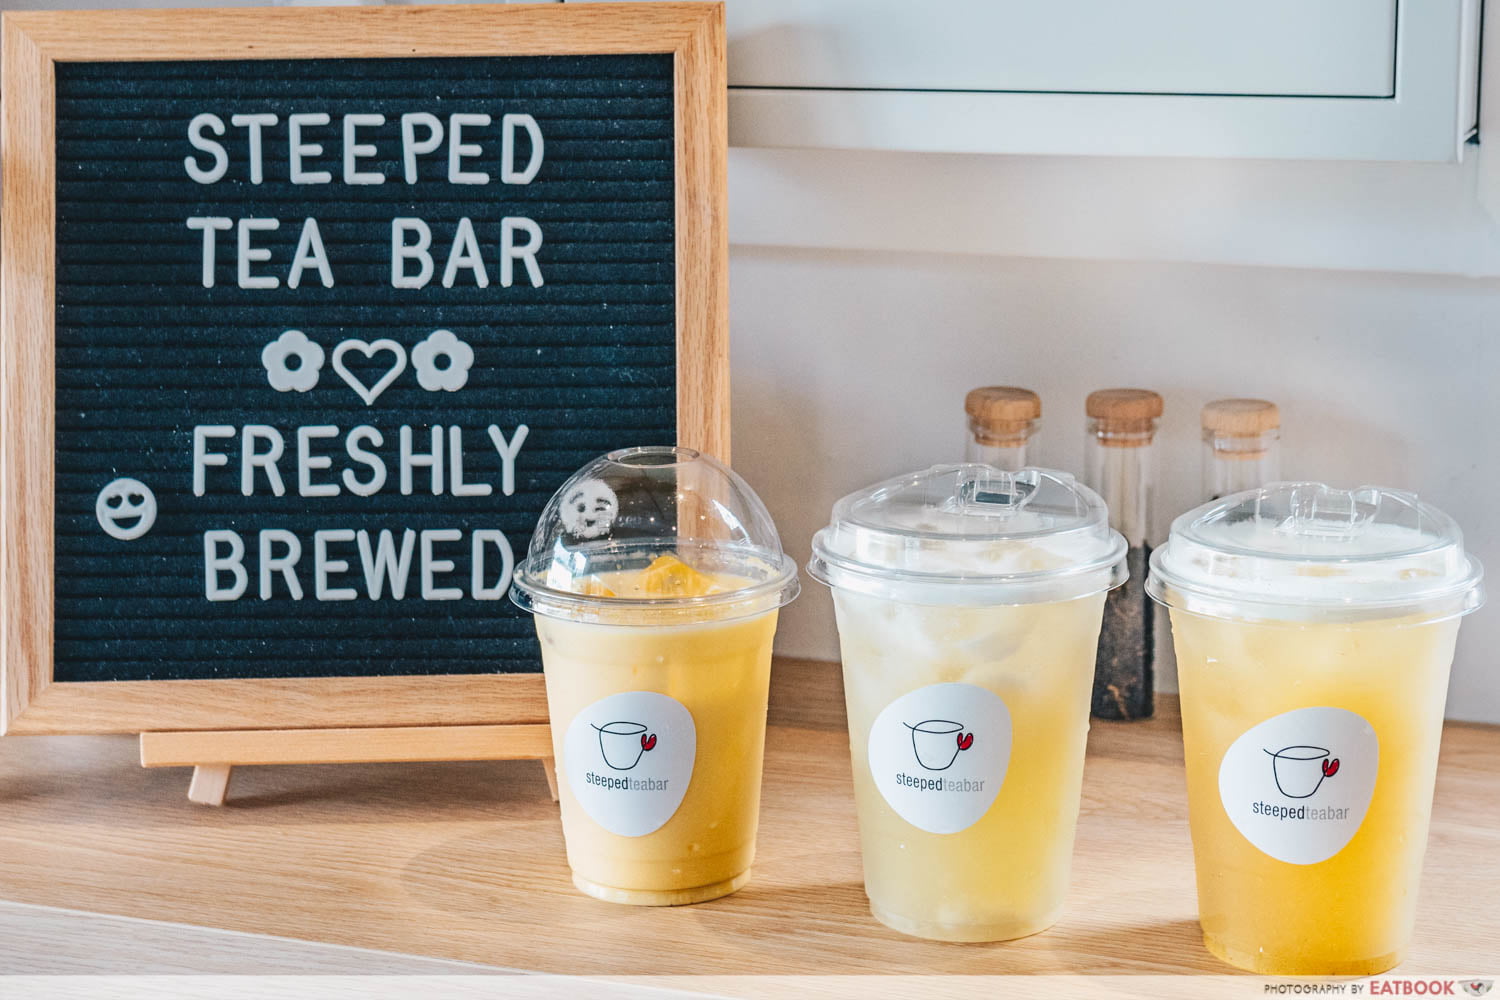 STEEPED Tea Bar - All drinks closeup shot